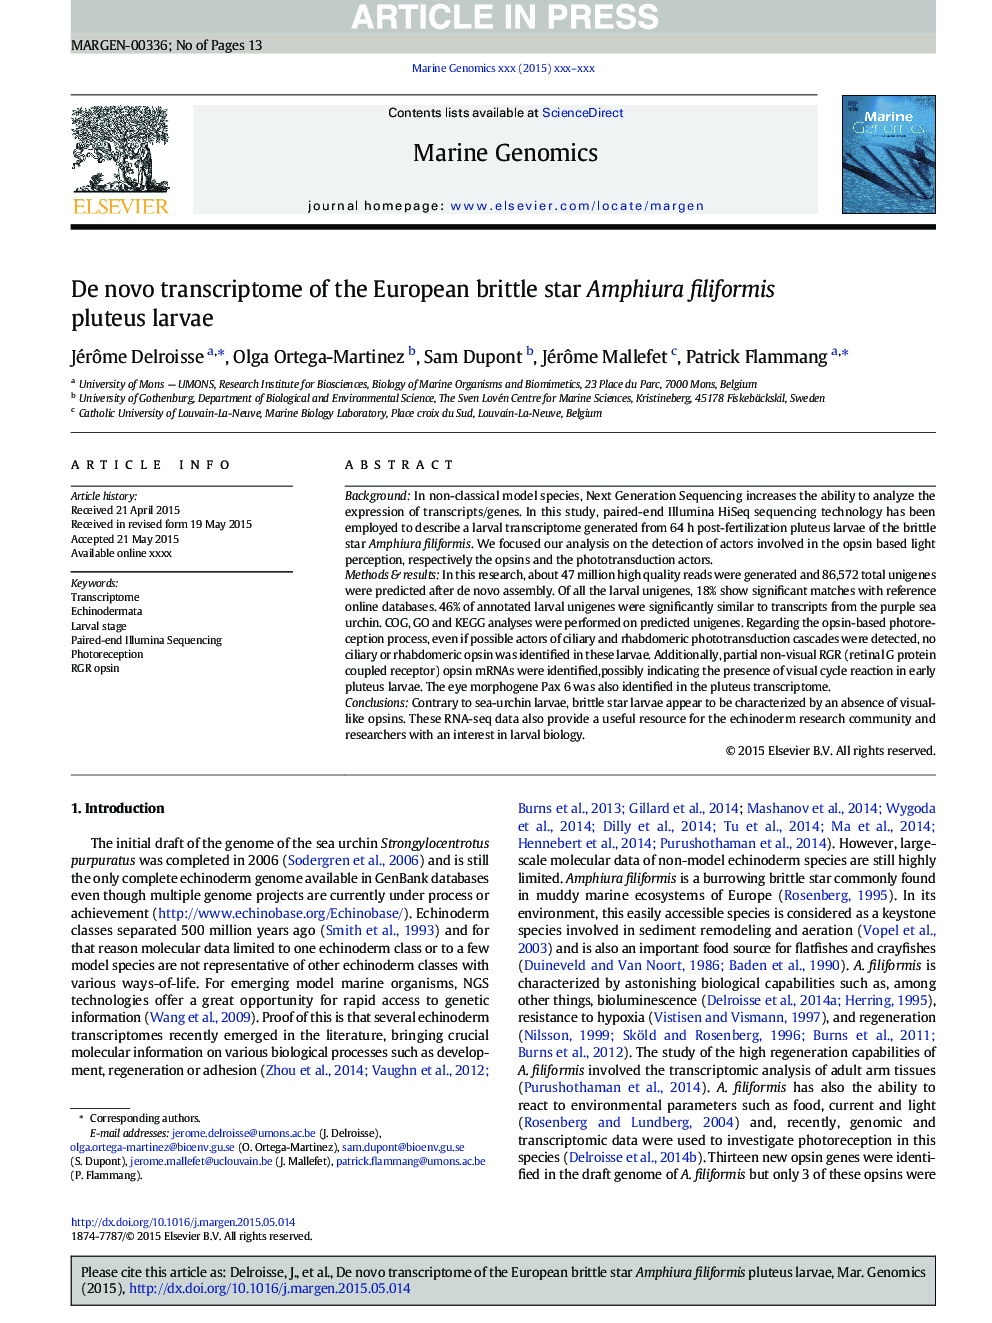 De novo transcriptome of the European brittle star Amphiura filiformis pluteus larvae